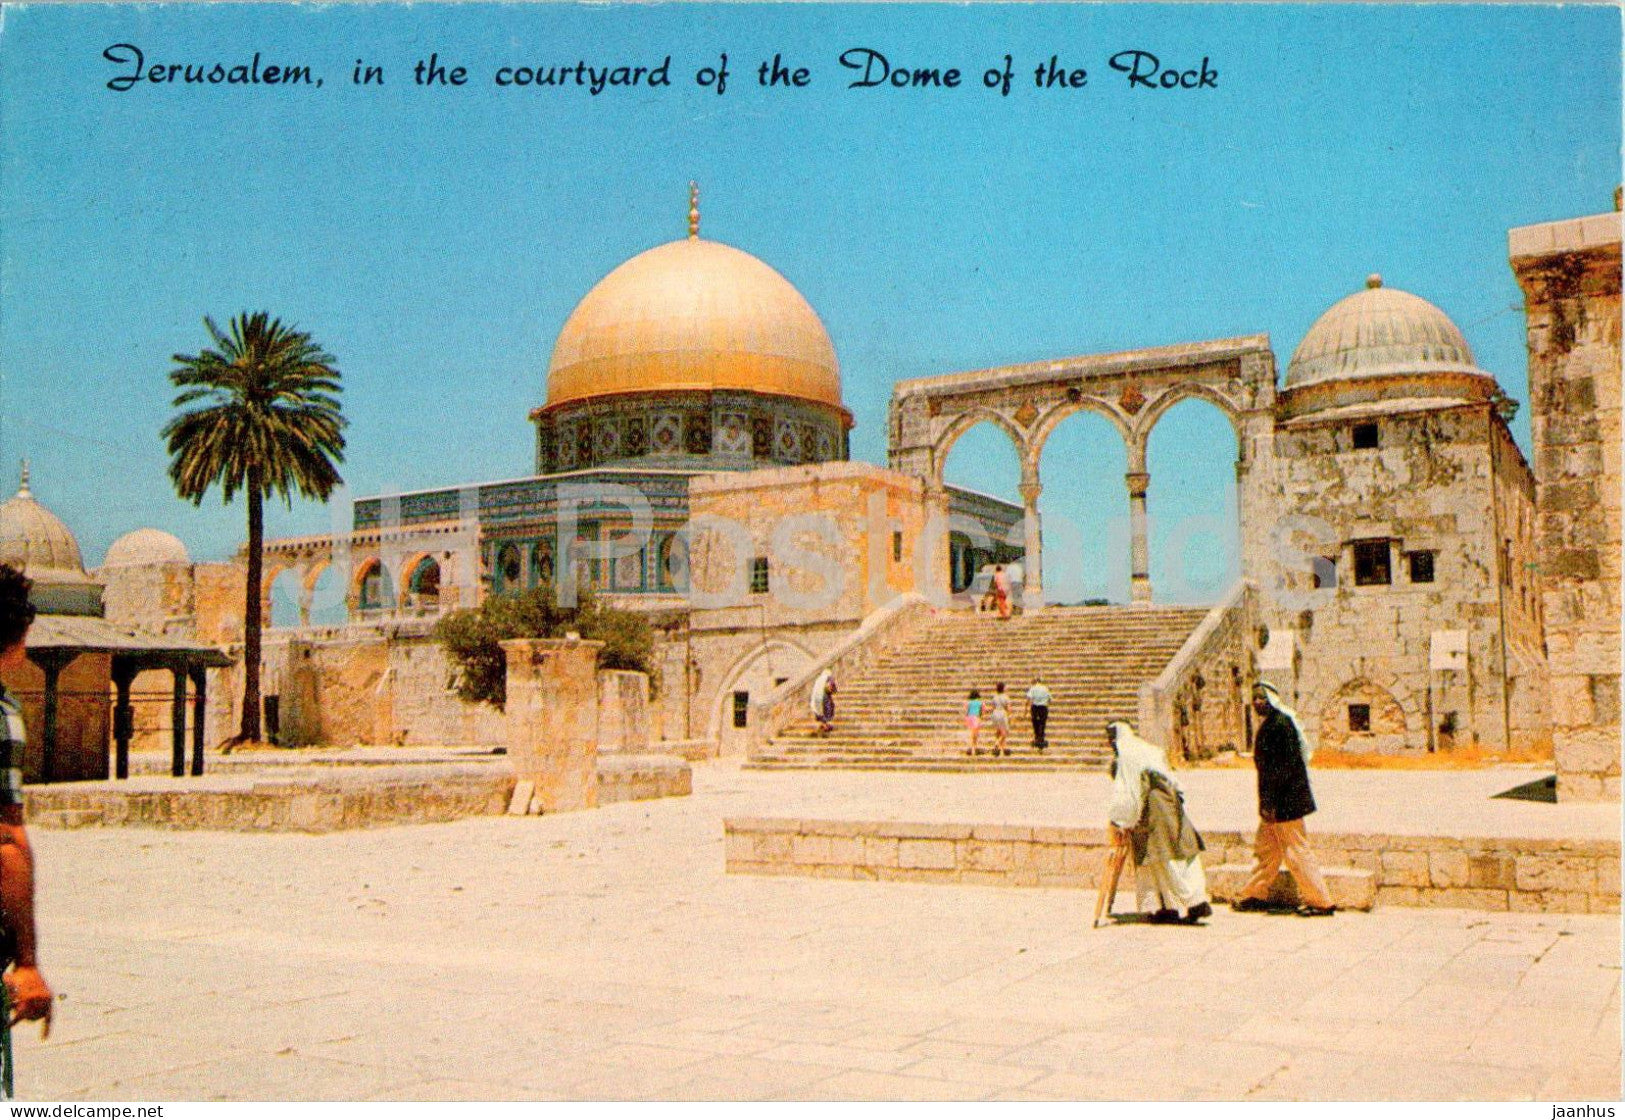 Jerusalem - Dome of the Rock - 1139 - Israel - unused - JH Postcards